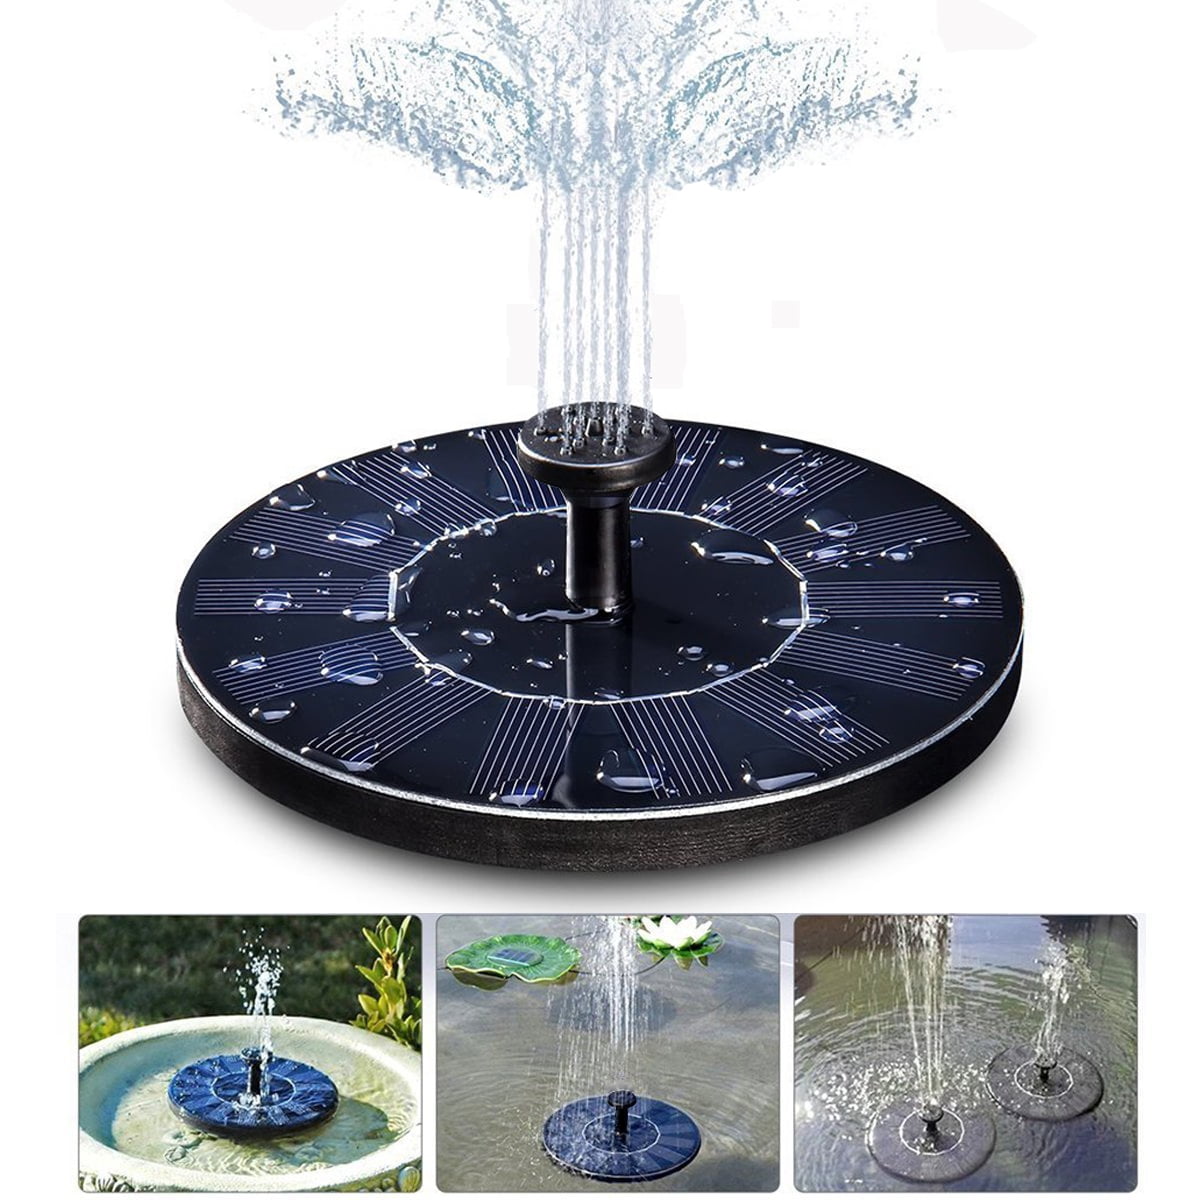 ON Clearance Solar Powered Bird Bath Fountain Pump, Outdoor Water Fountains For Pool, Garden, Aquarium (black)